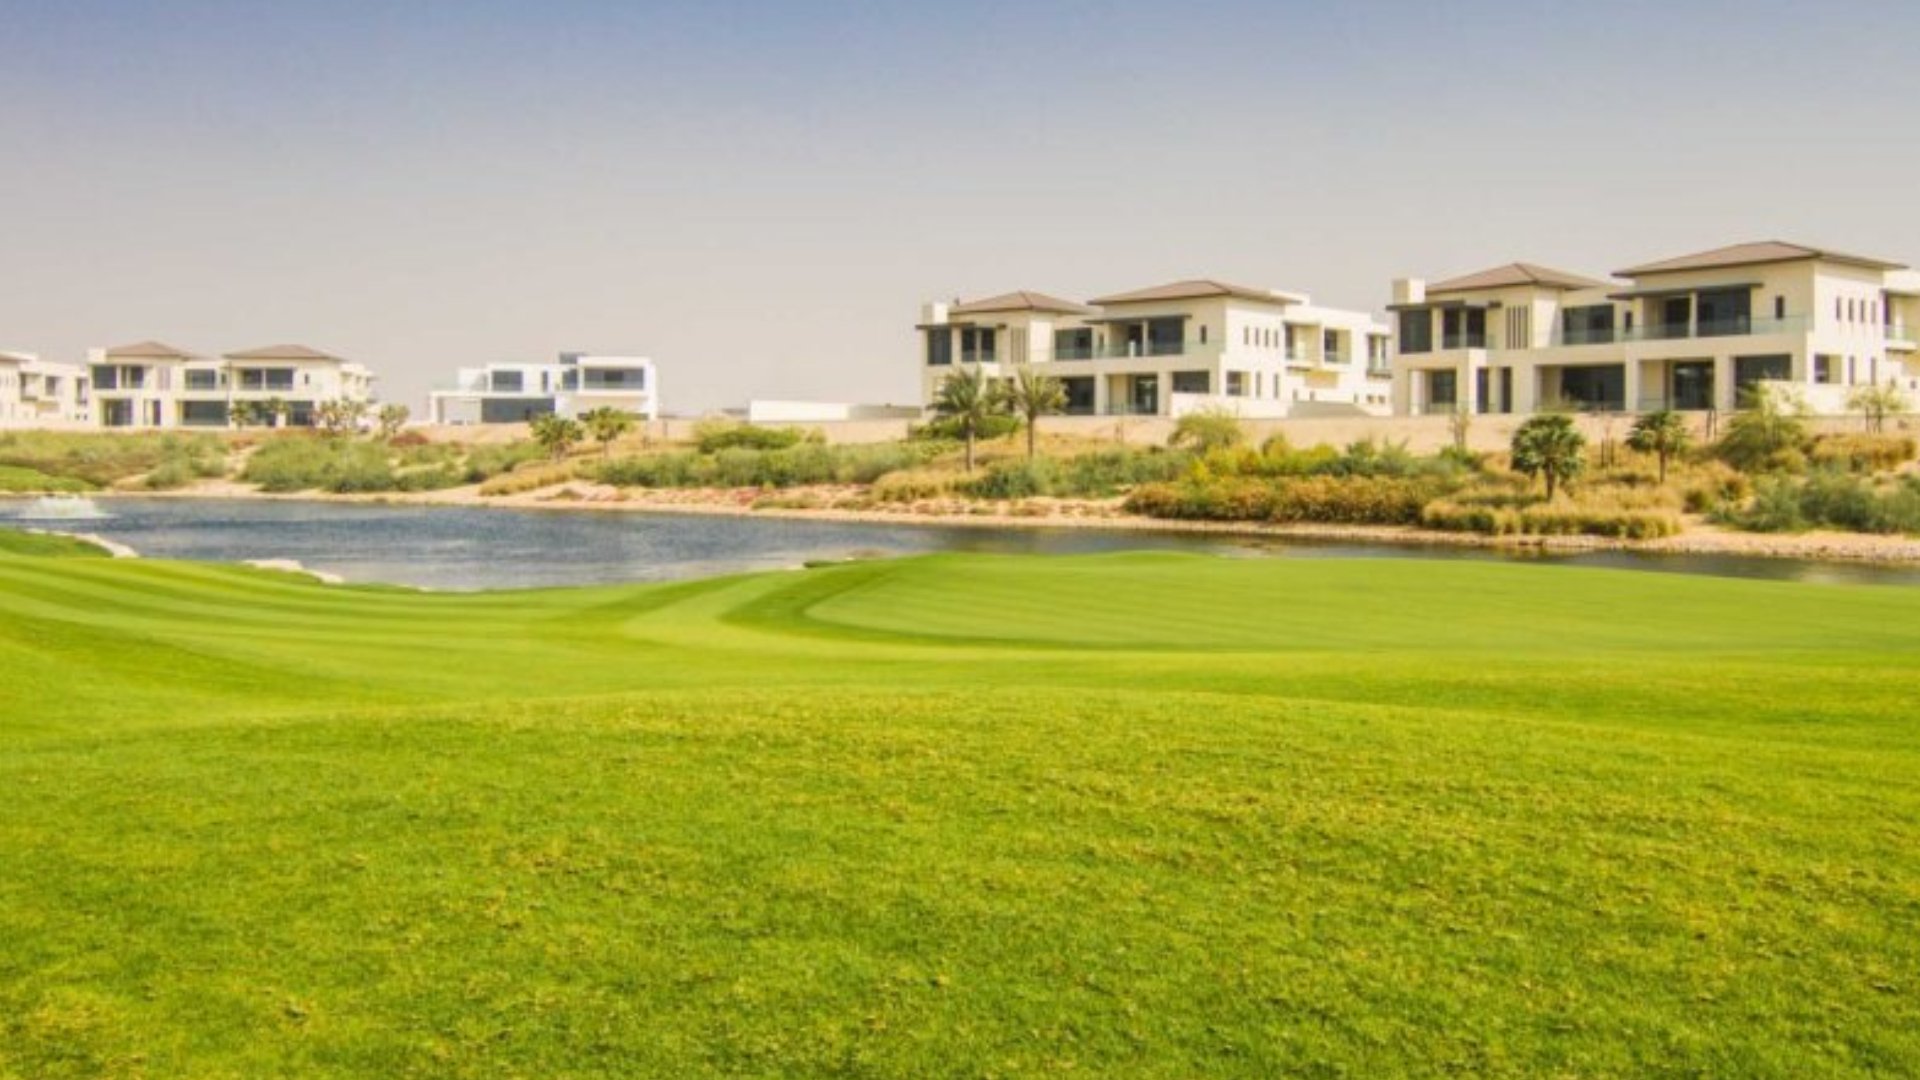 DUBAI HILLS VIEW by Emaar Properties in Dubai Hills Estate, Dubai - 3